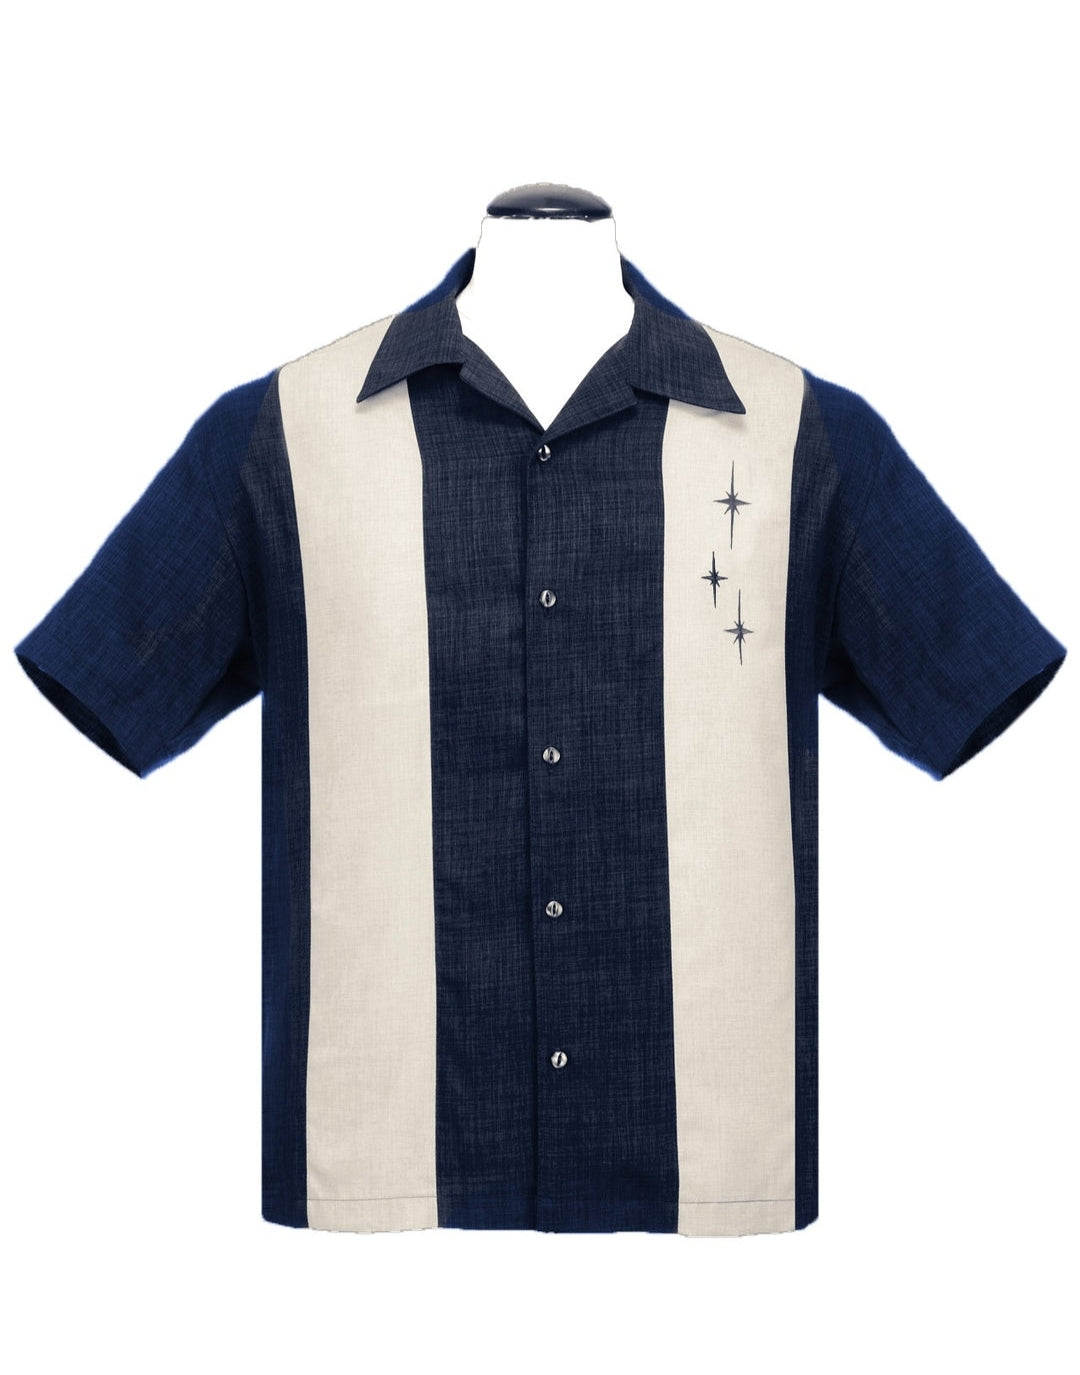 Three Star Panel Bowling Shirt in Denim
by Steady Clothing